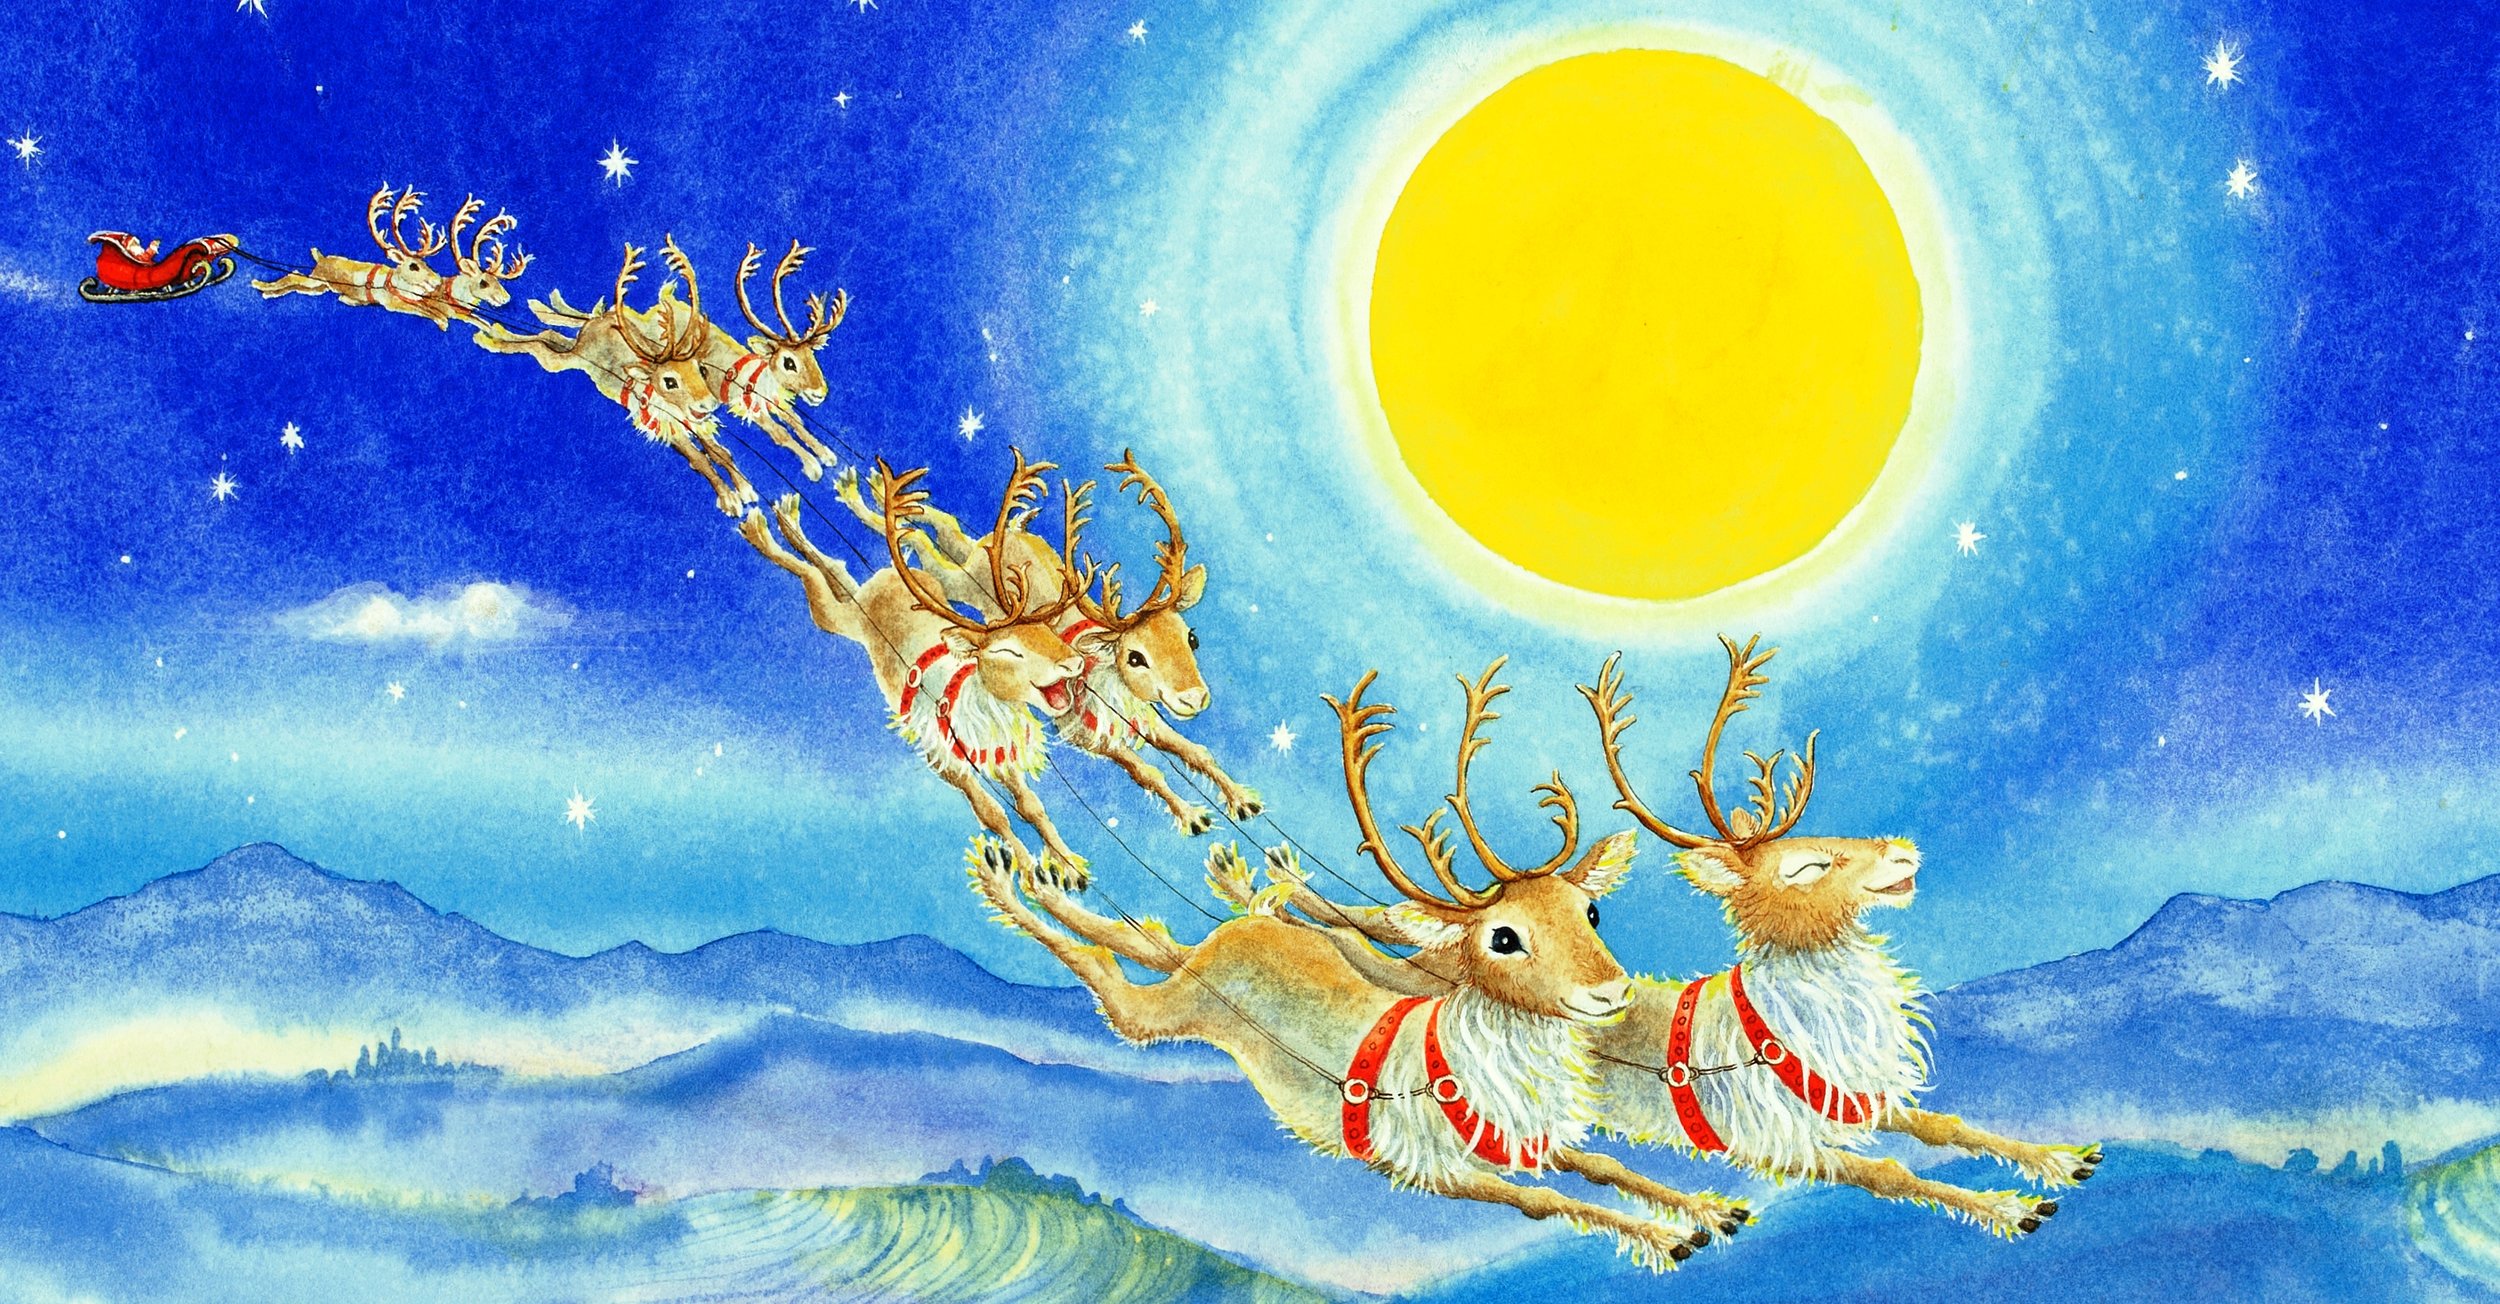 Reindeer -Dashaway Harper).jpg